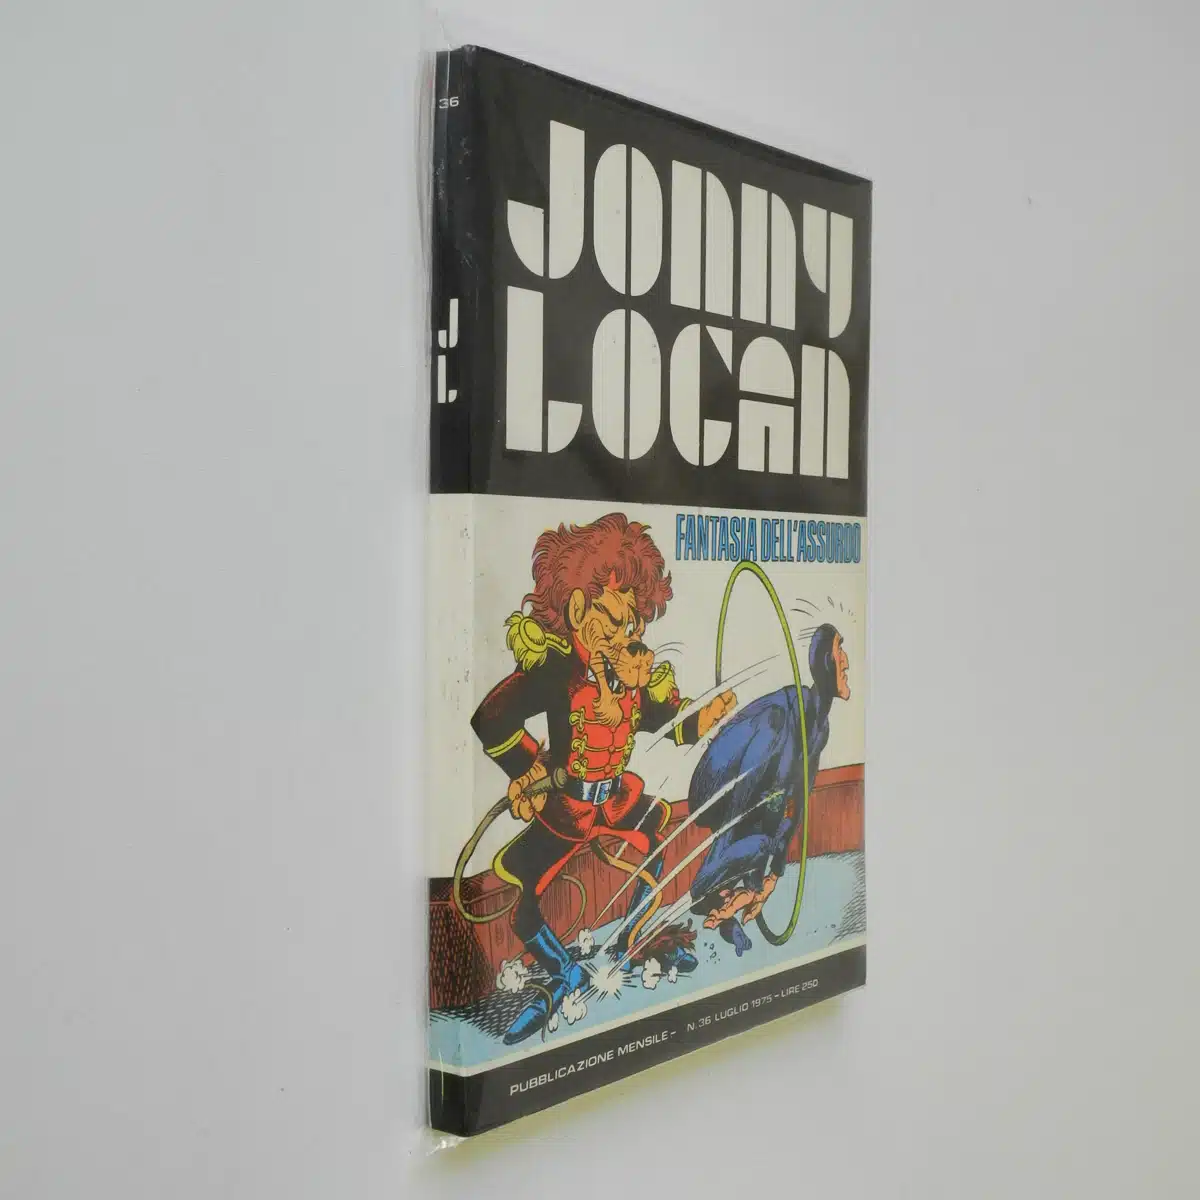 Jonny Logan n. 36 Dardo Fantasia dell’assurdo